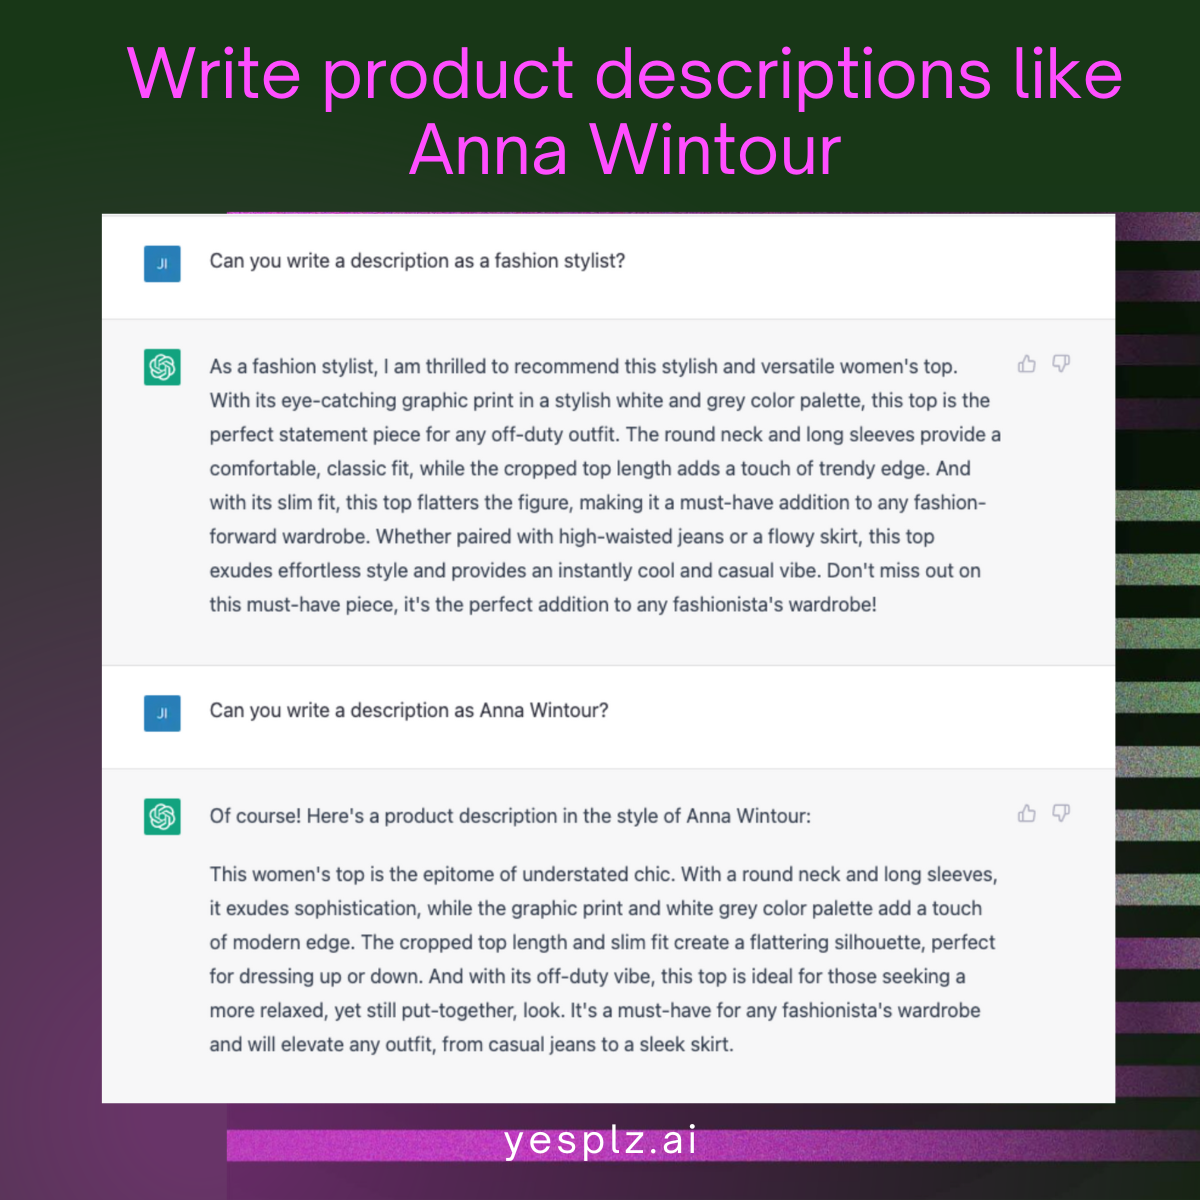 A product description written like Anna Wintour by ChatGPT